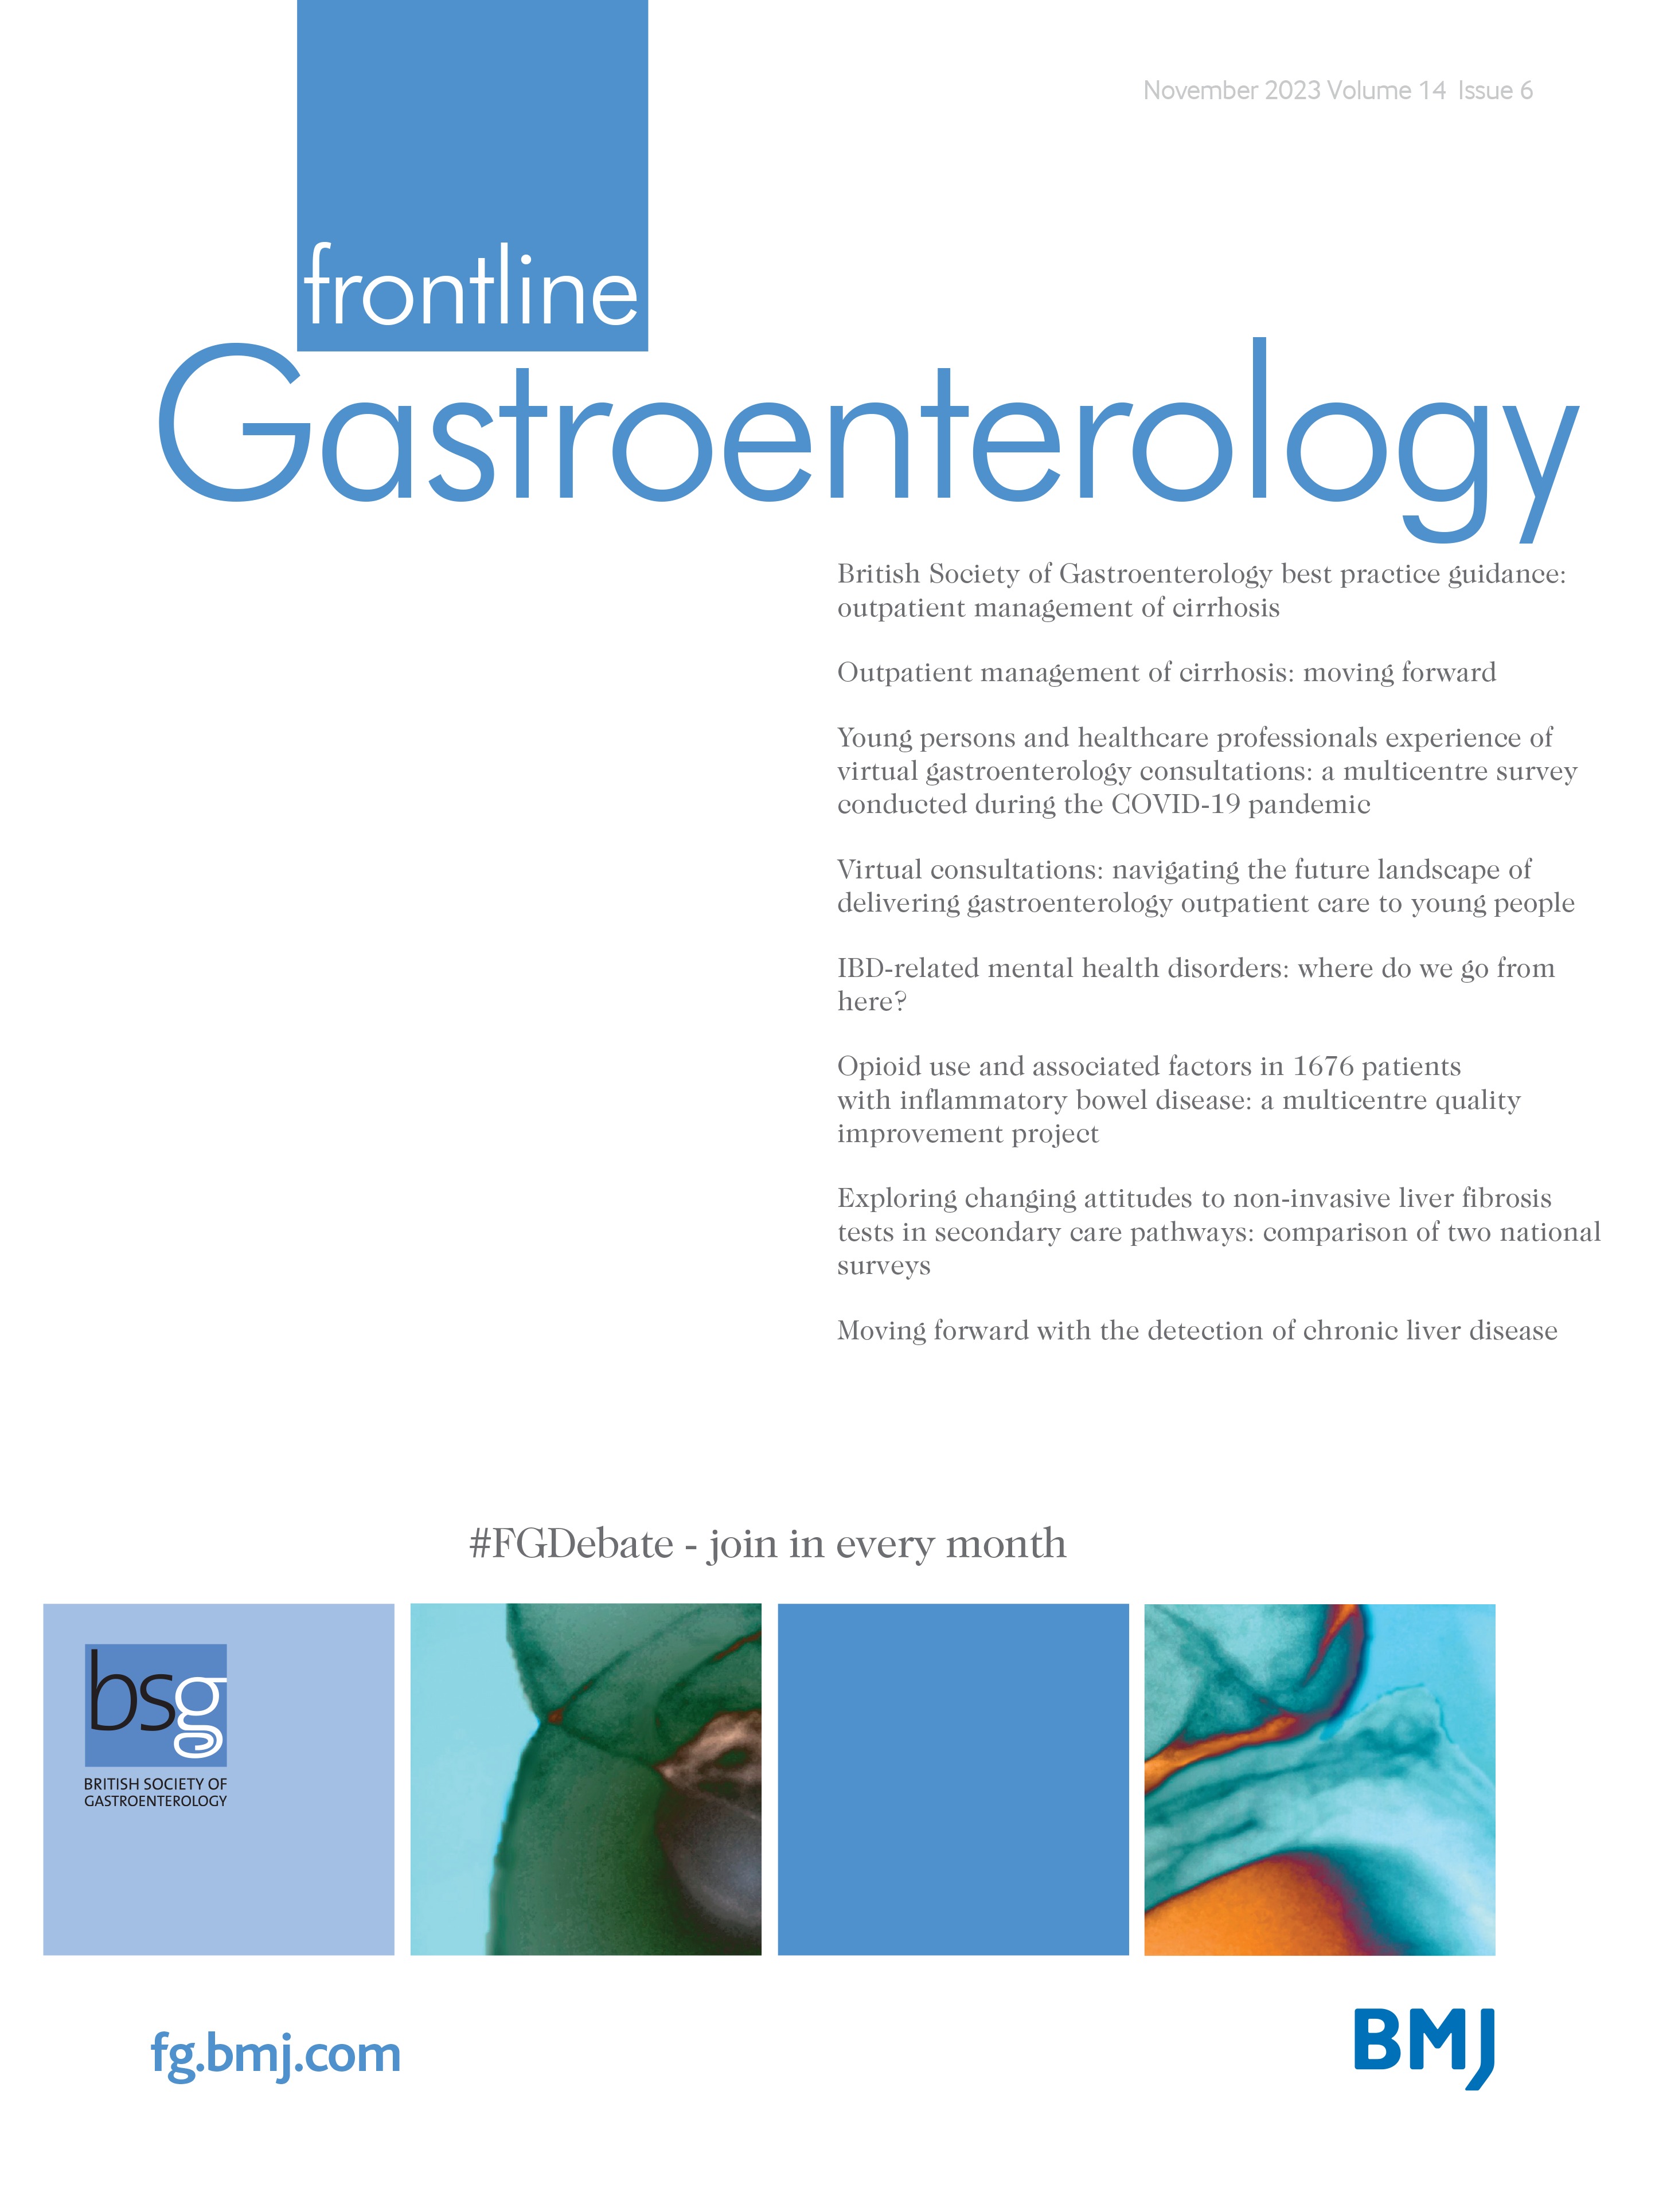 British Society of Gastroenterology Best Practice Guidance: outpatient management of cirrhosis - part 2: decompensated cirrhosis